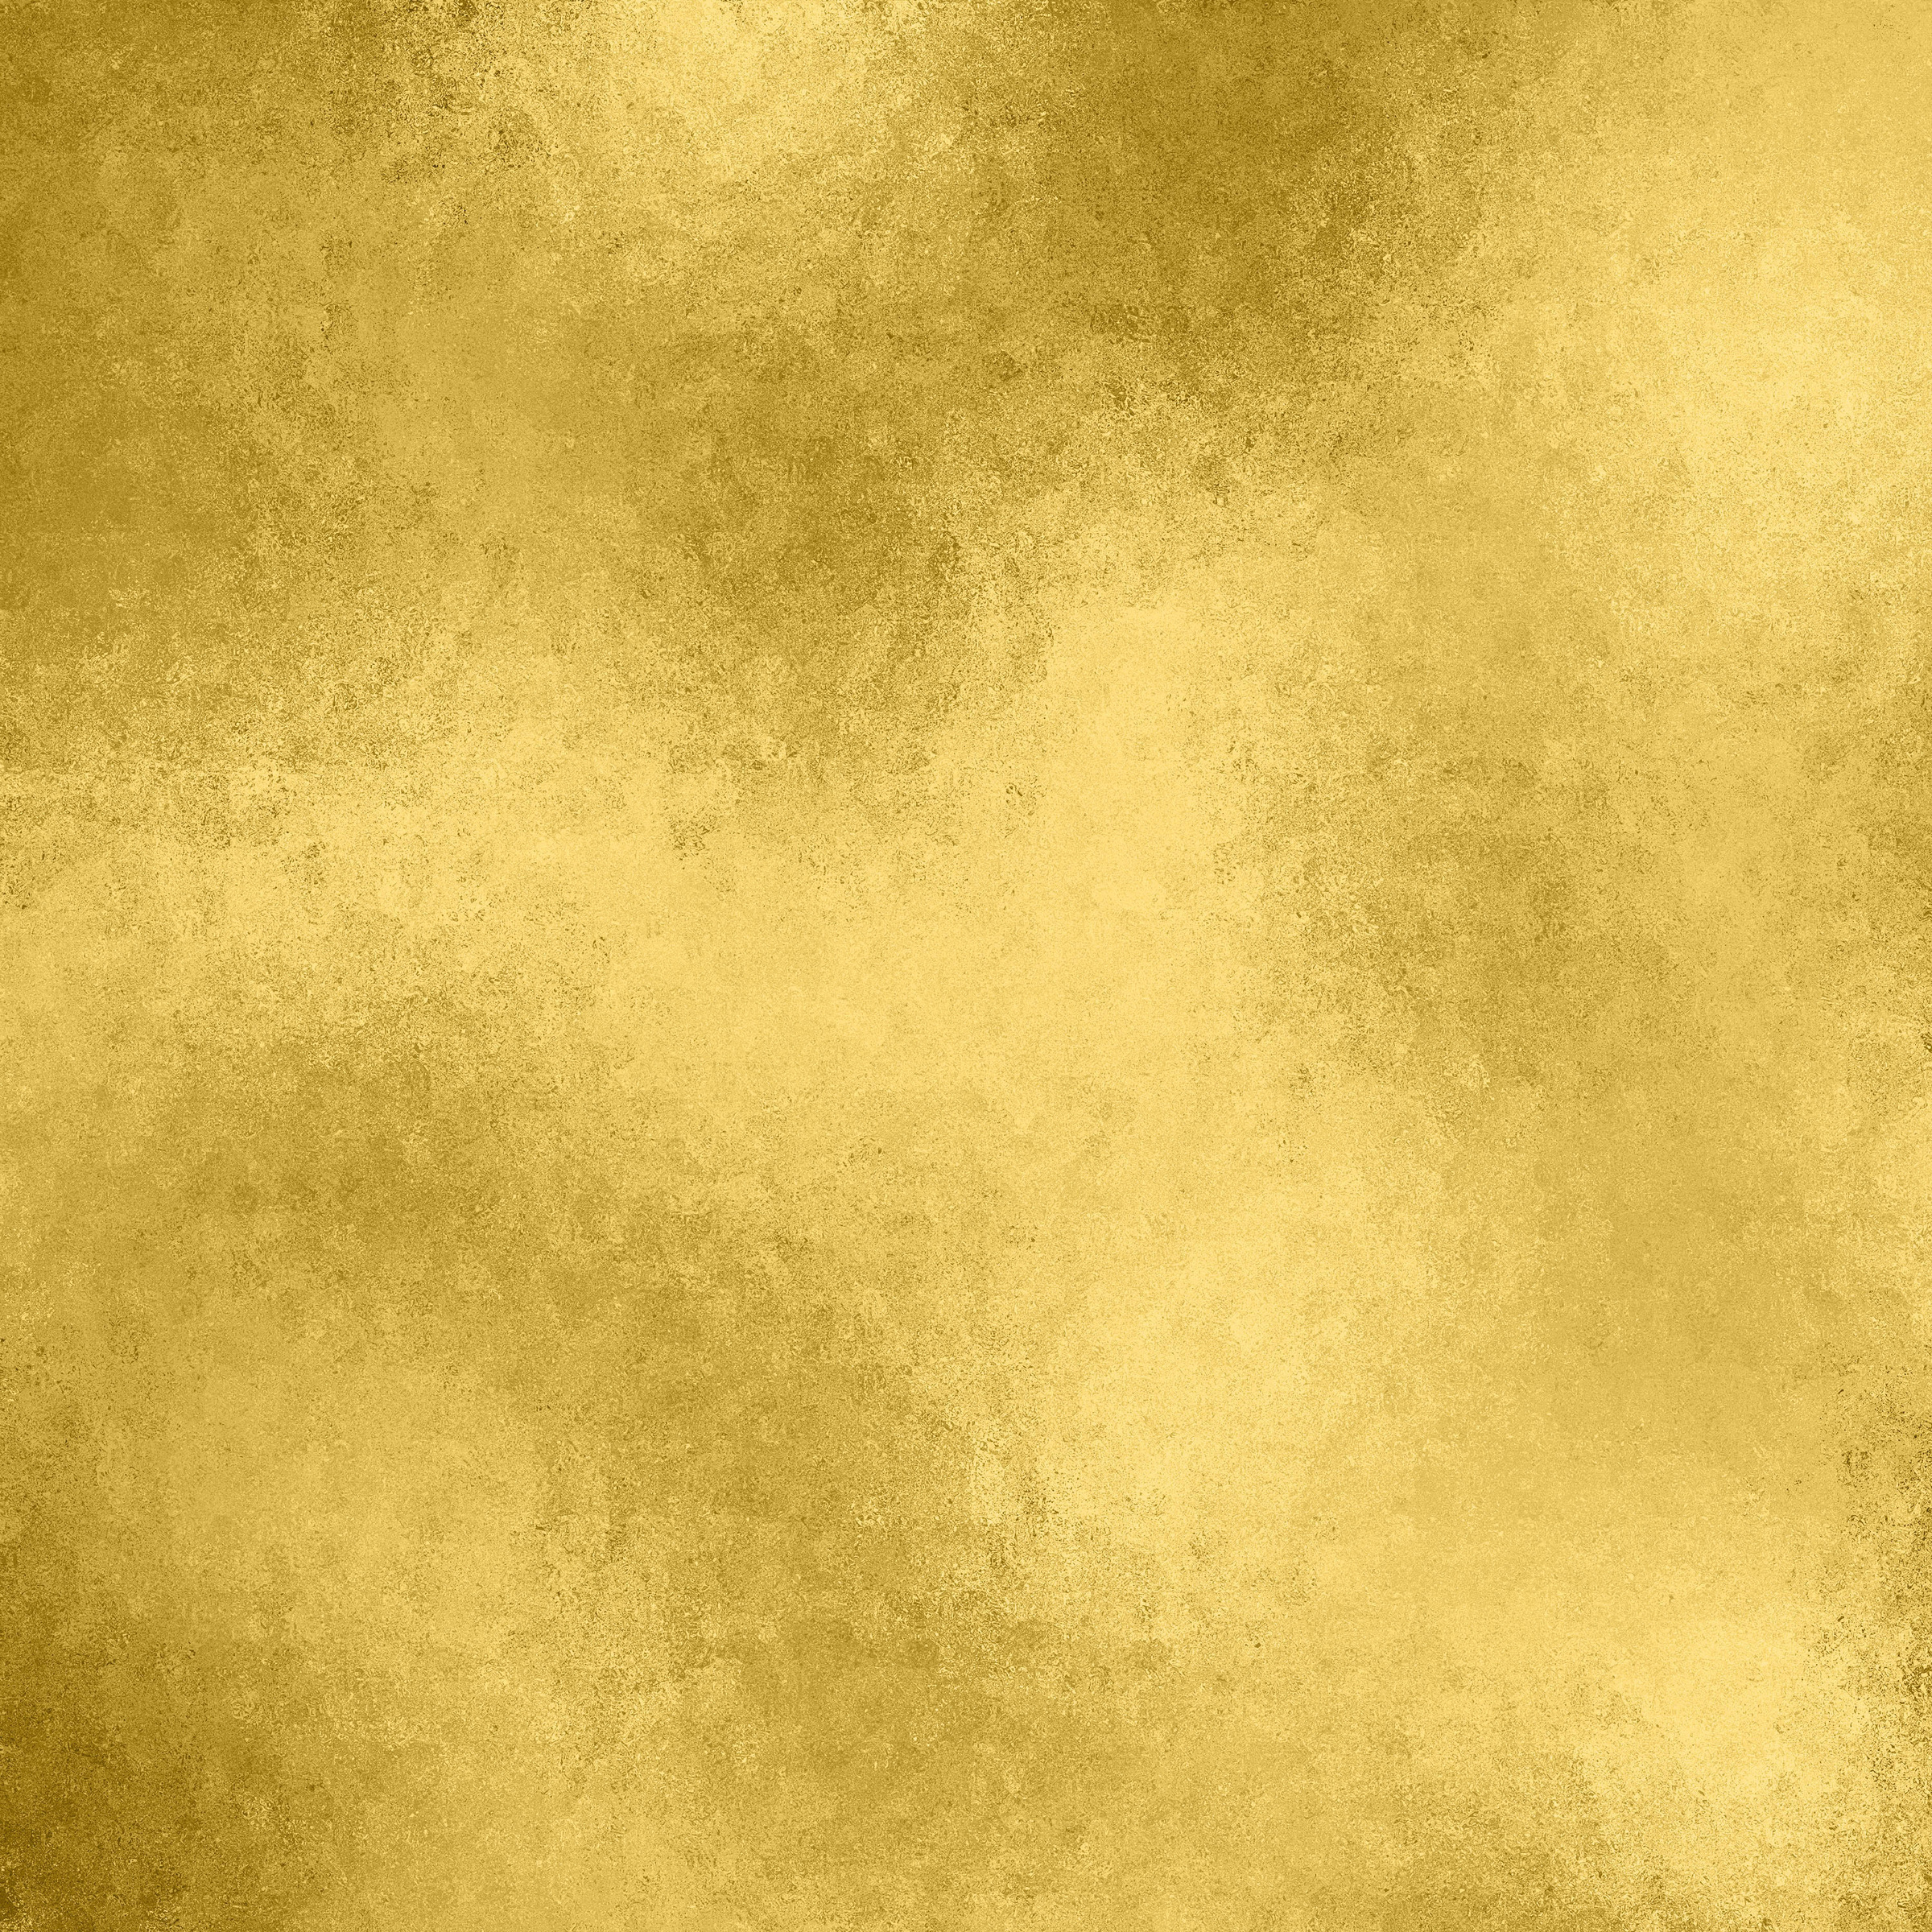 Bright Gold Metallic Foil Background Illustration